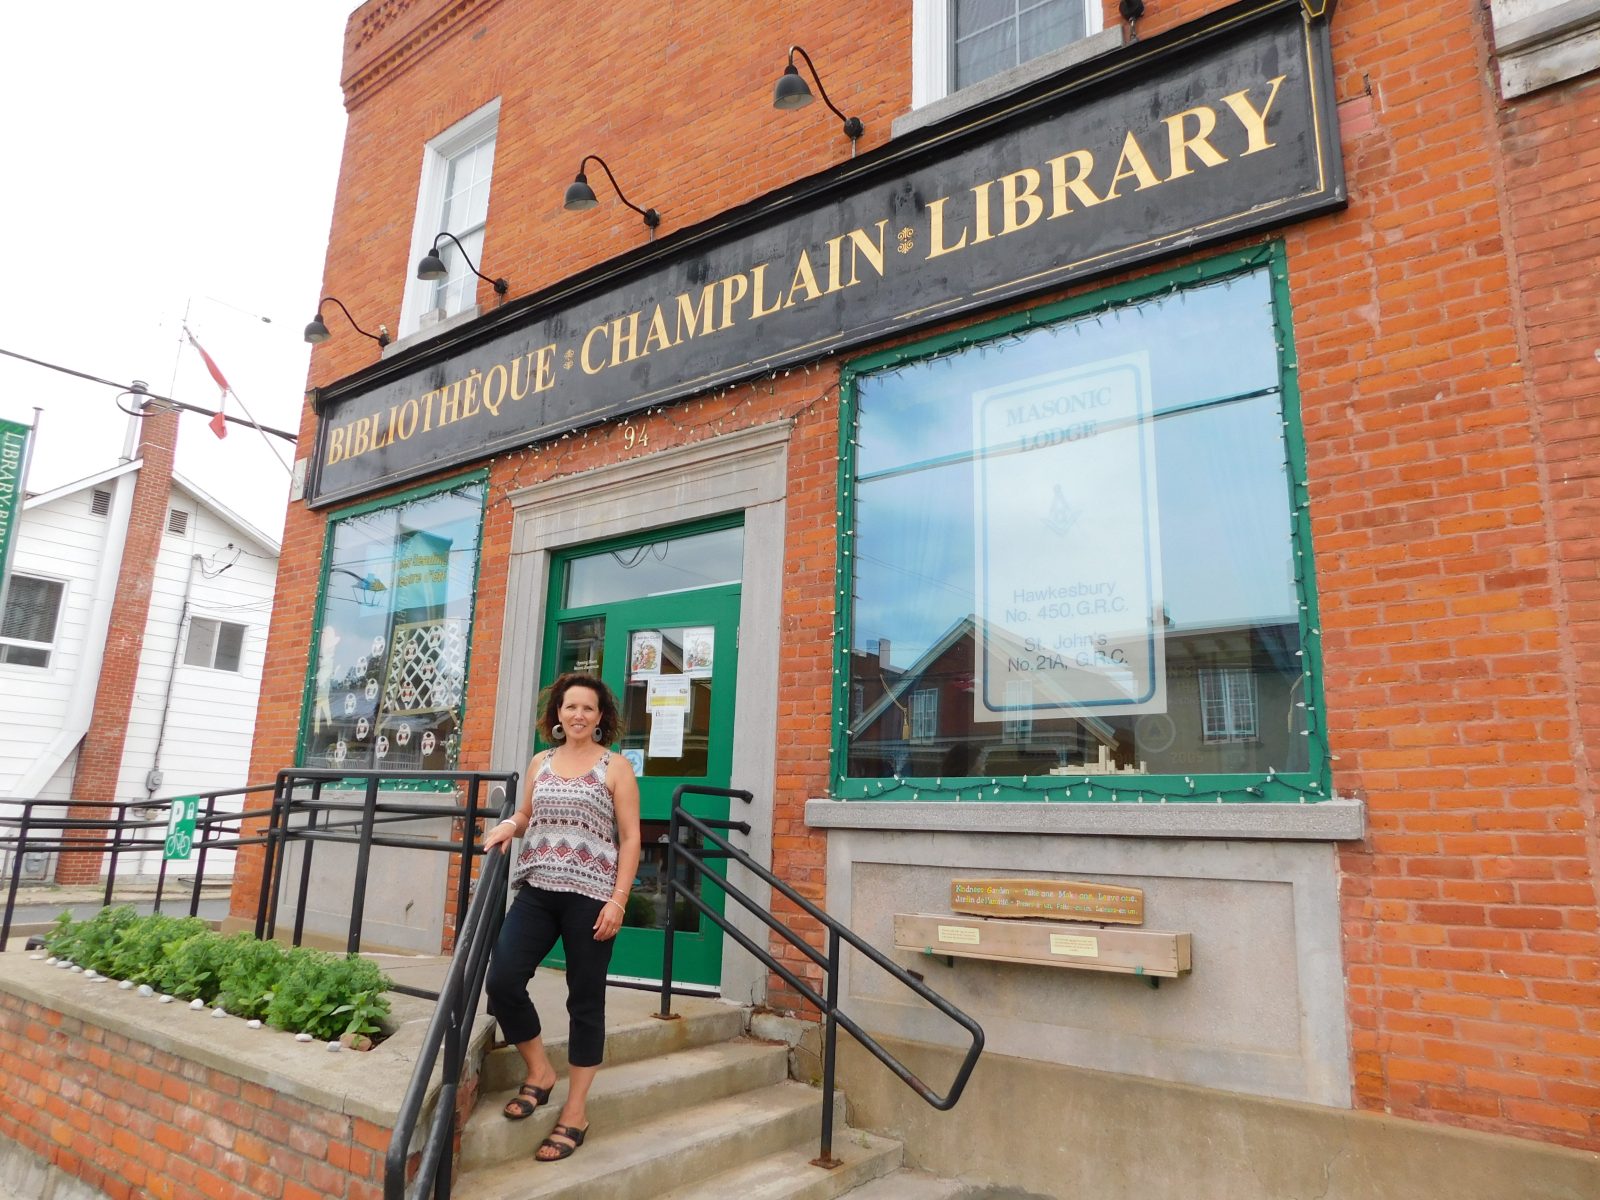 Public libraries can be public again